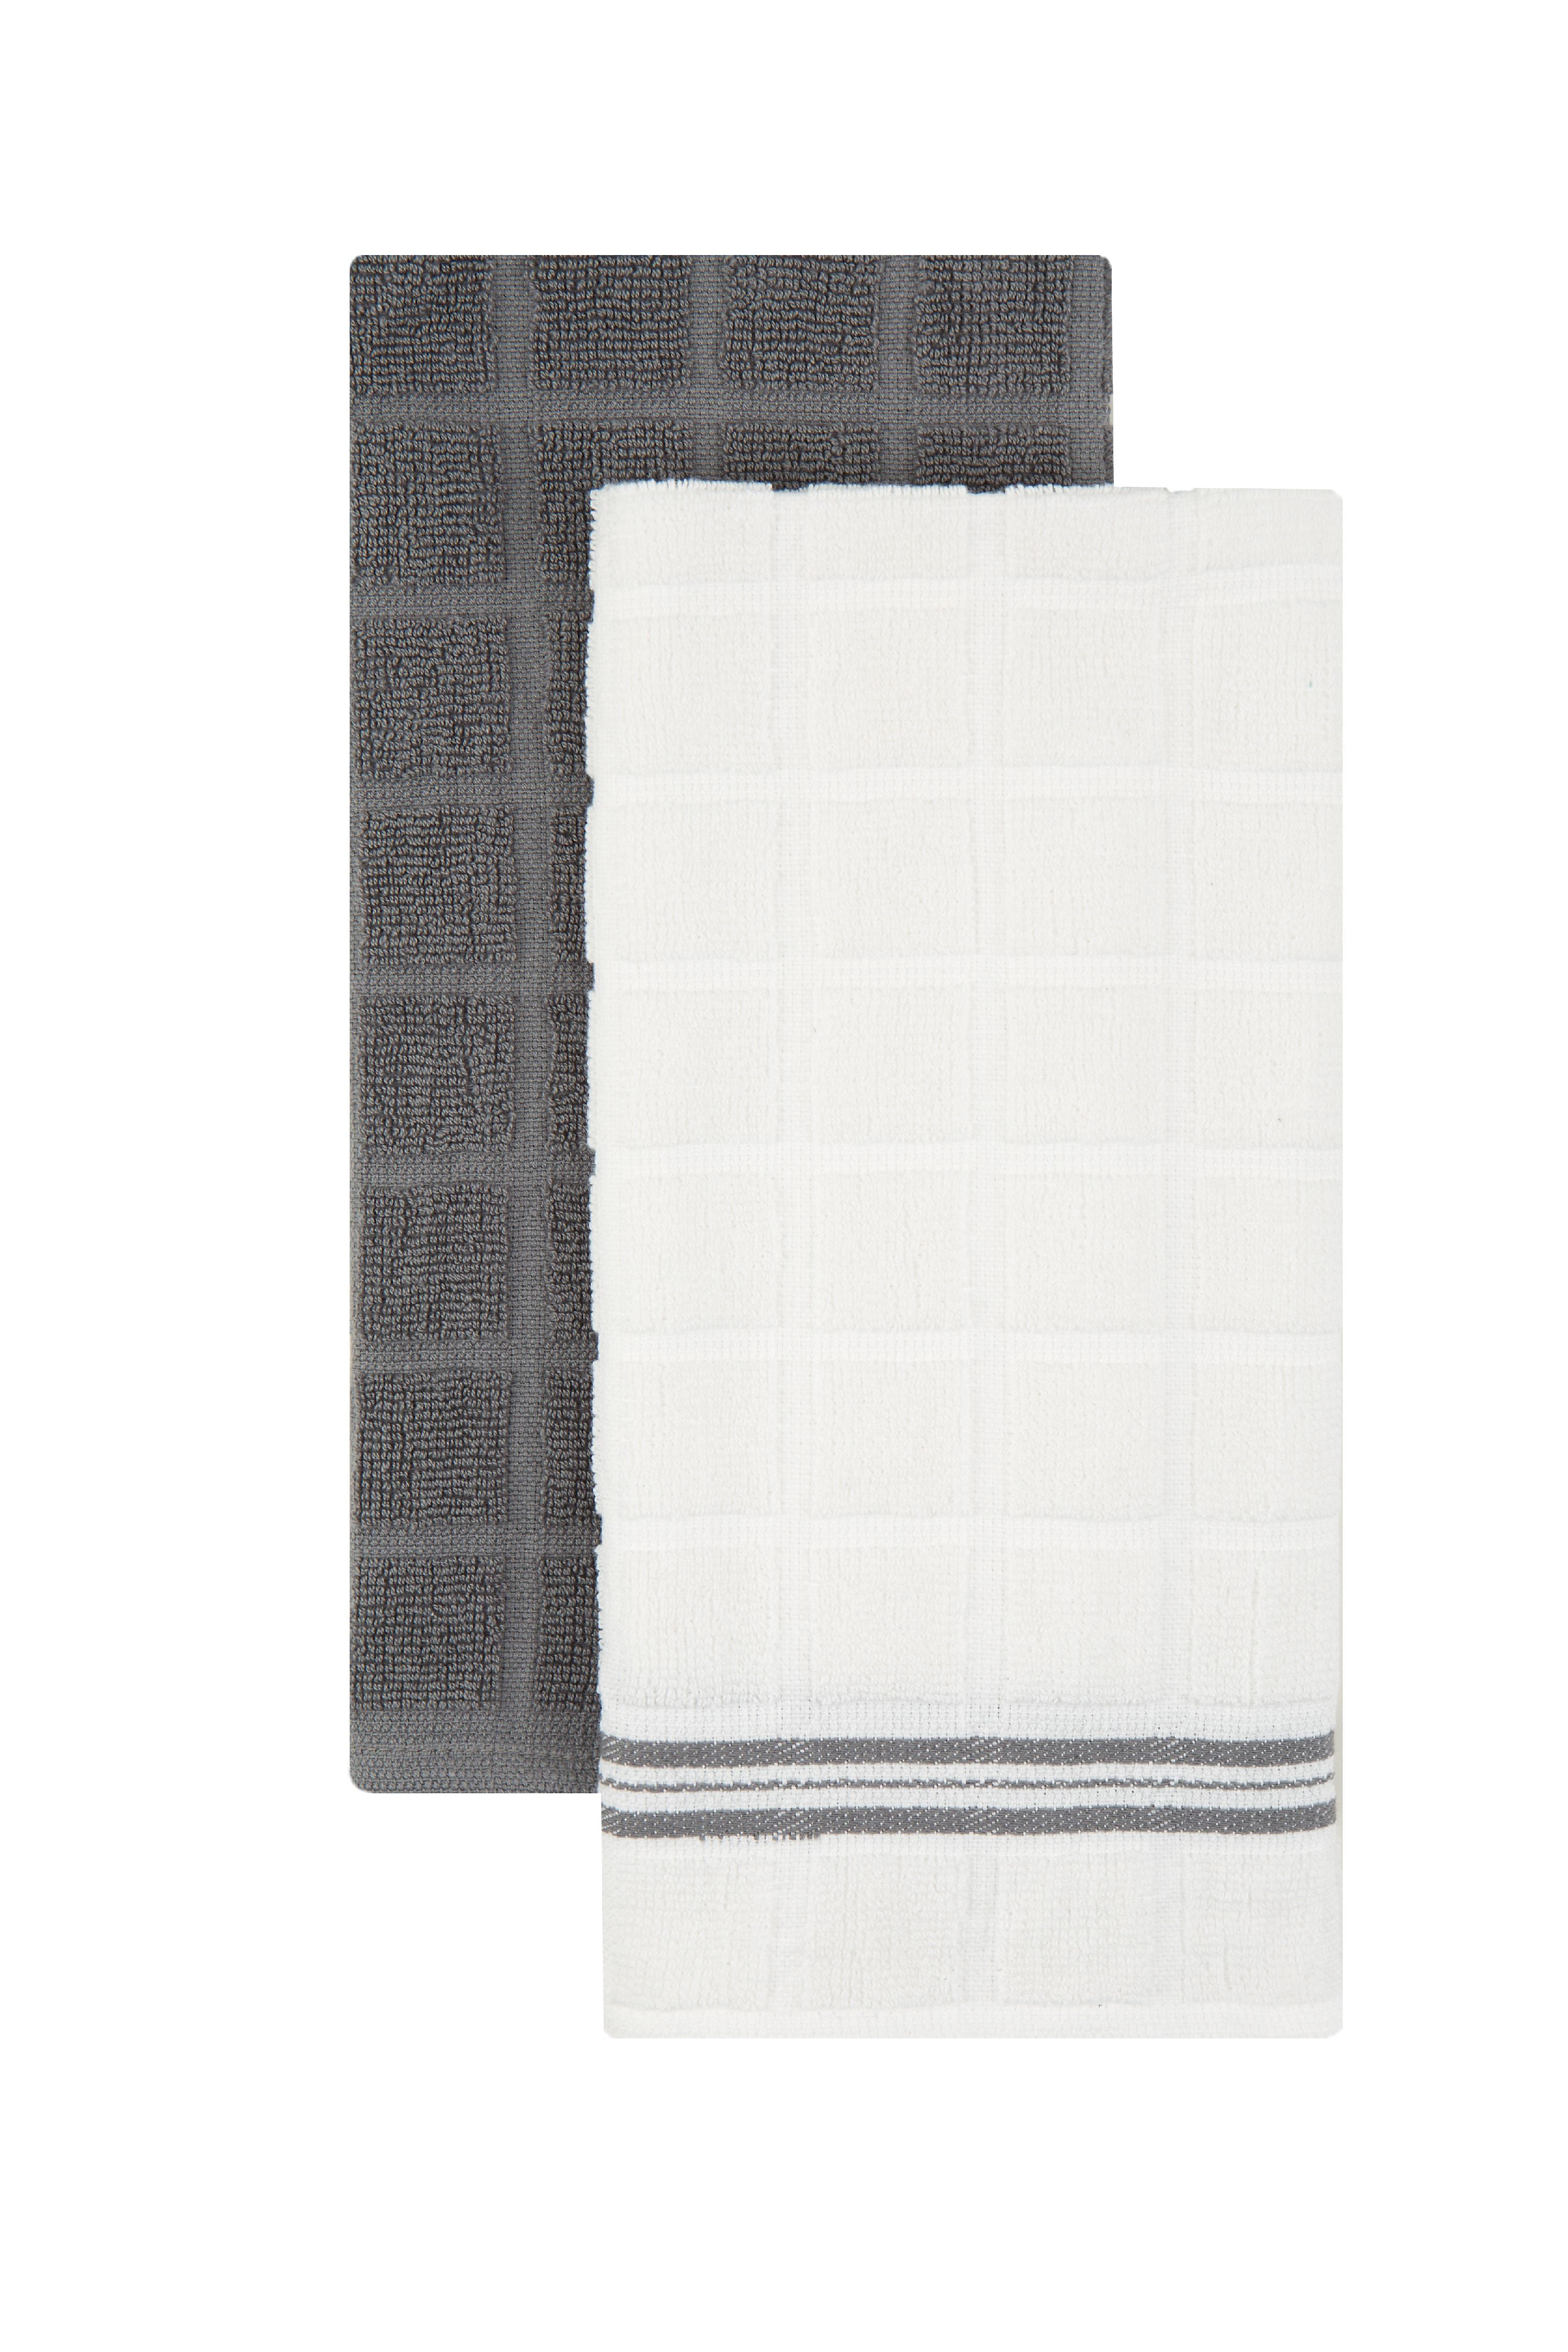 Give Thanks Oven Mitt + Towel Set – Domaci